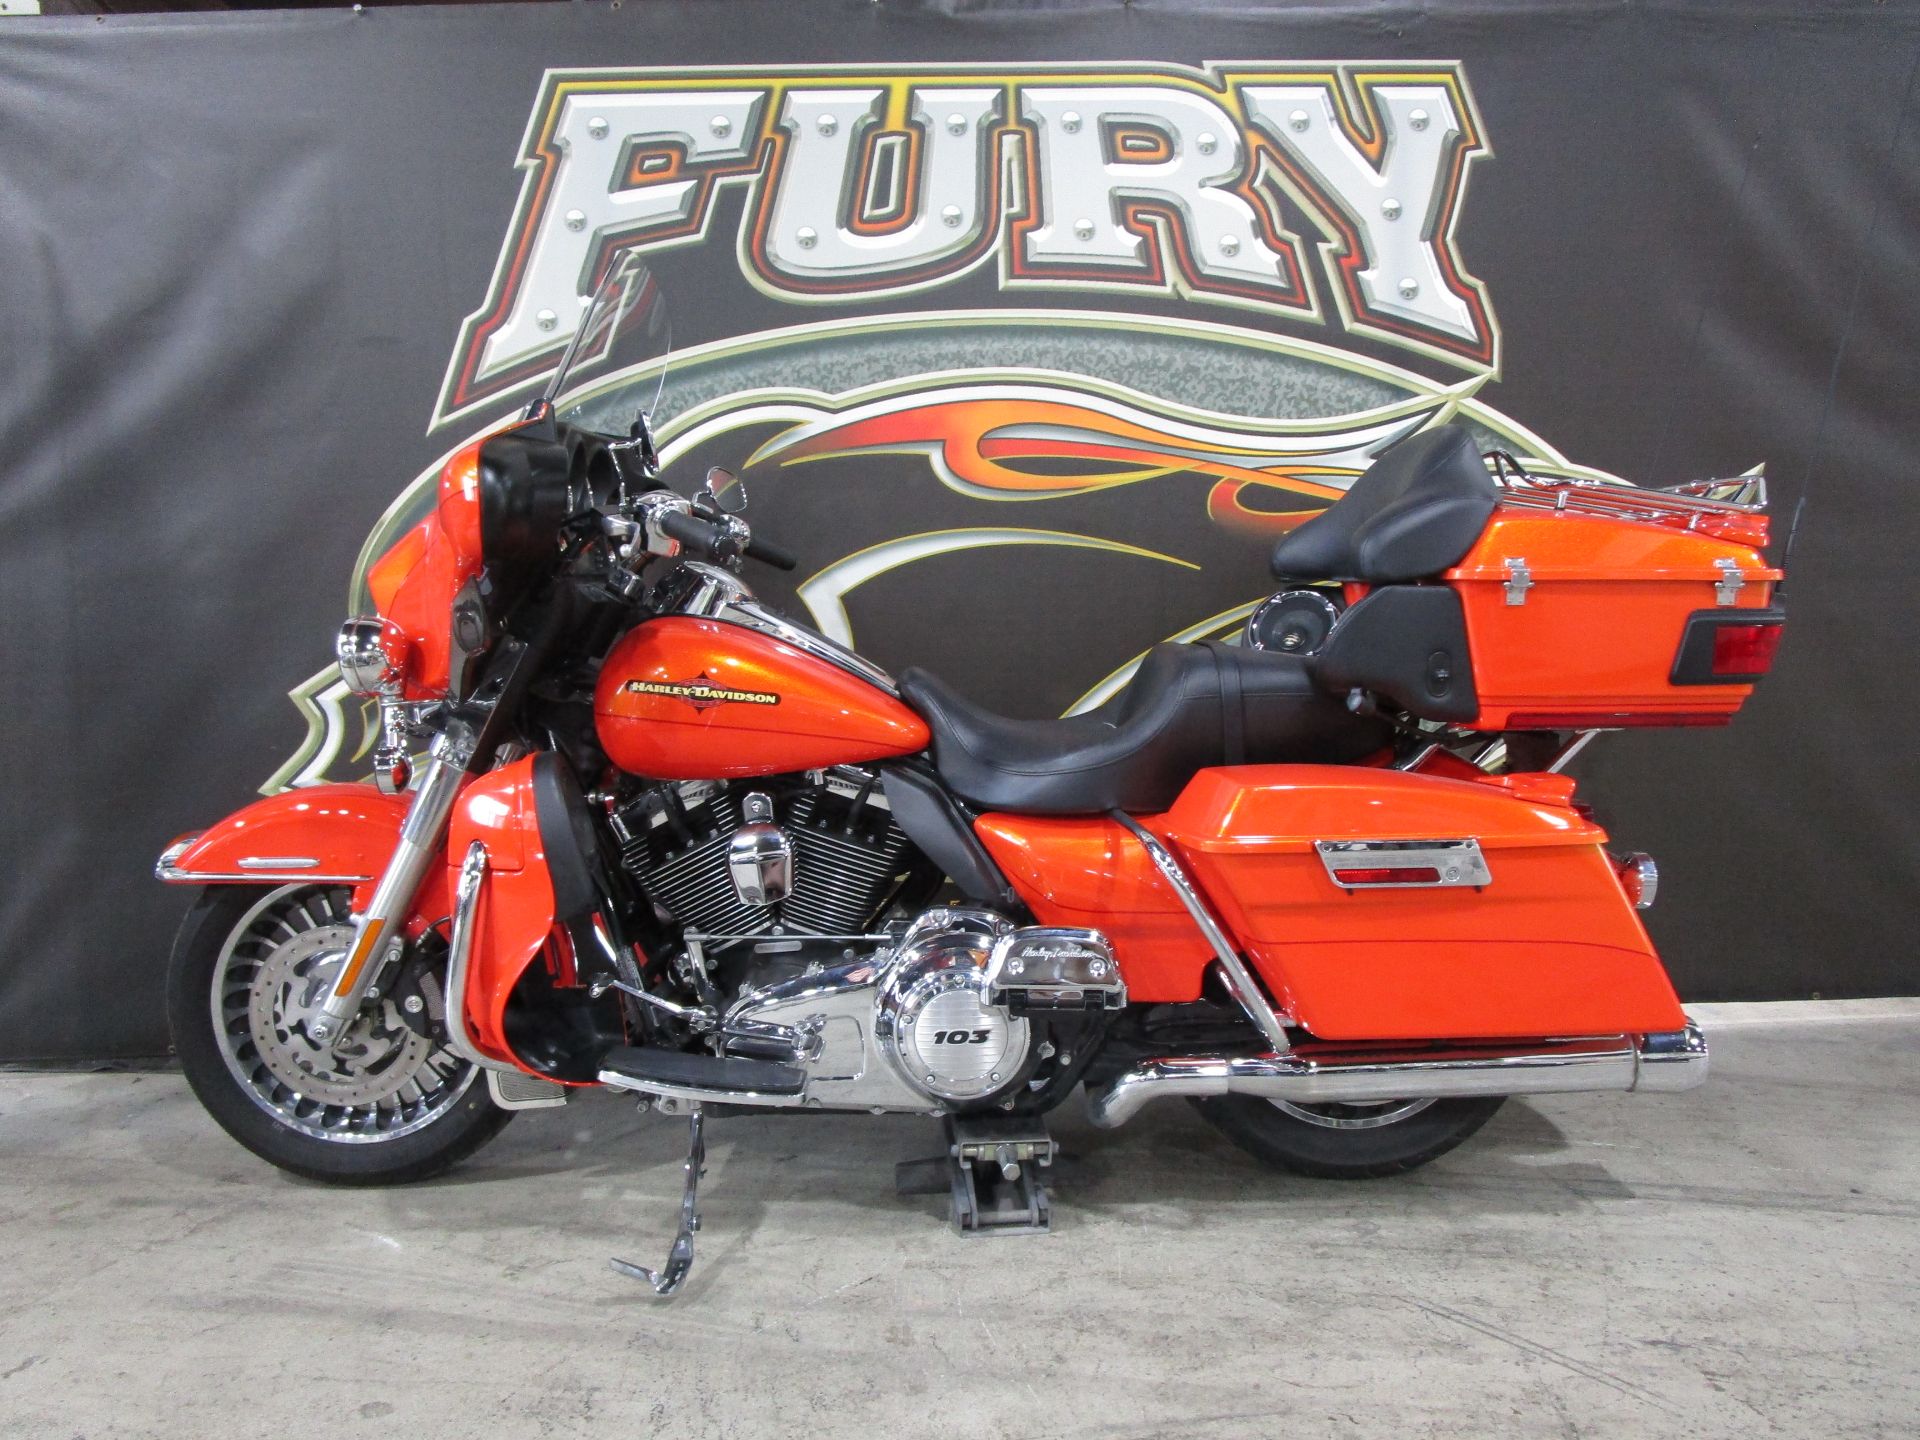 2012 Harley-Davidson Electra Glide® Ultra Limited in South Saint Paul, Minnesota - Photo 12